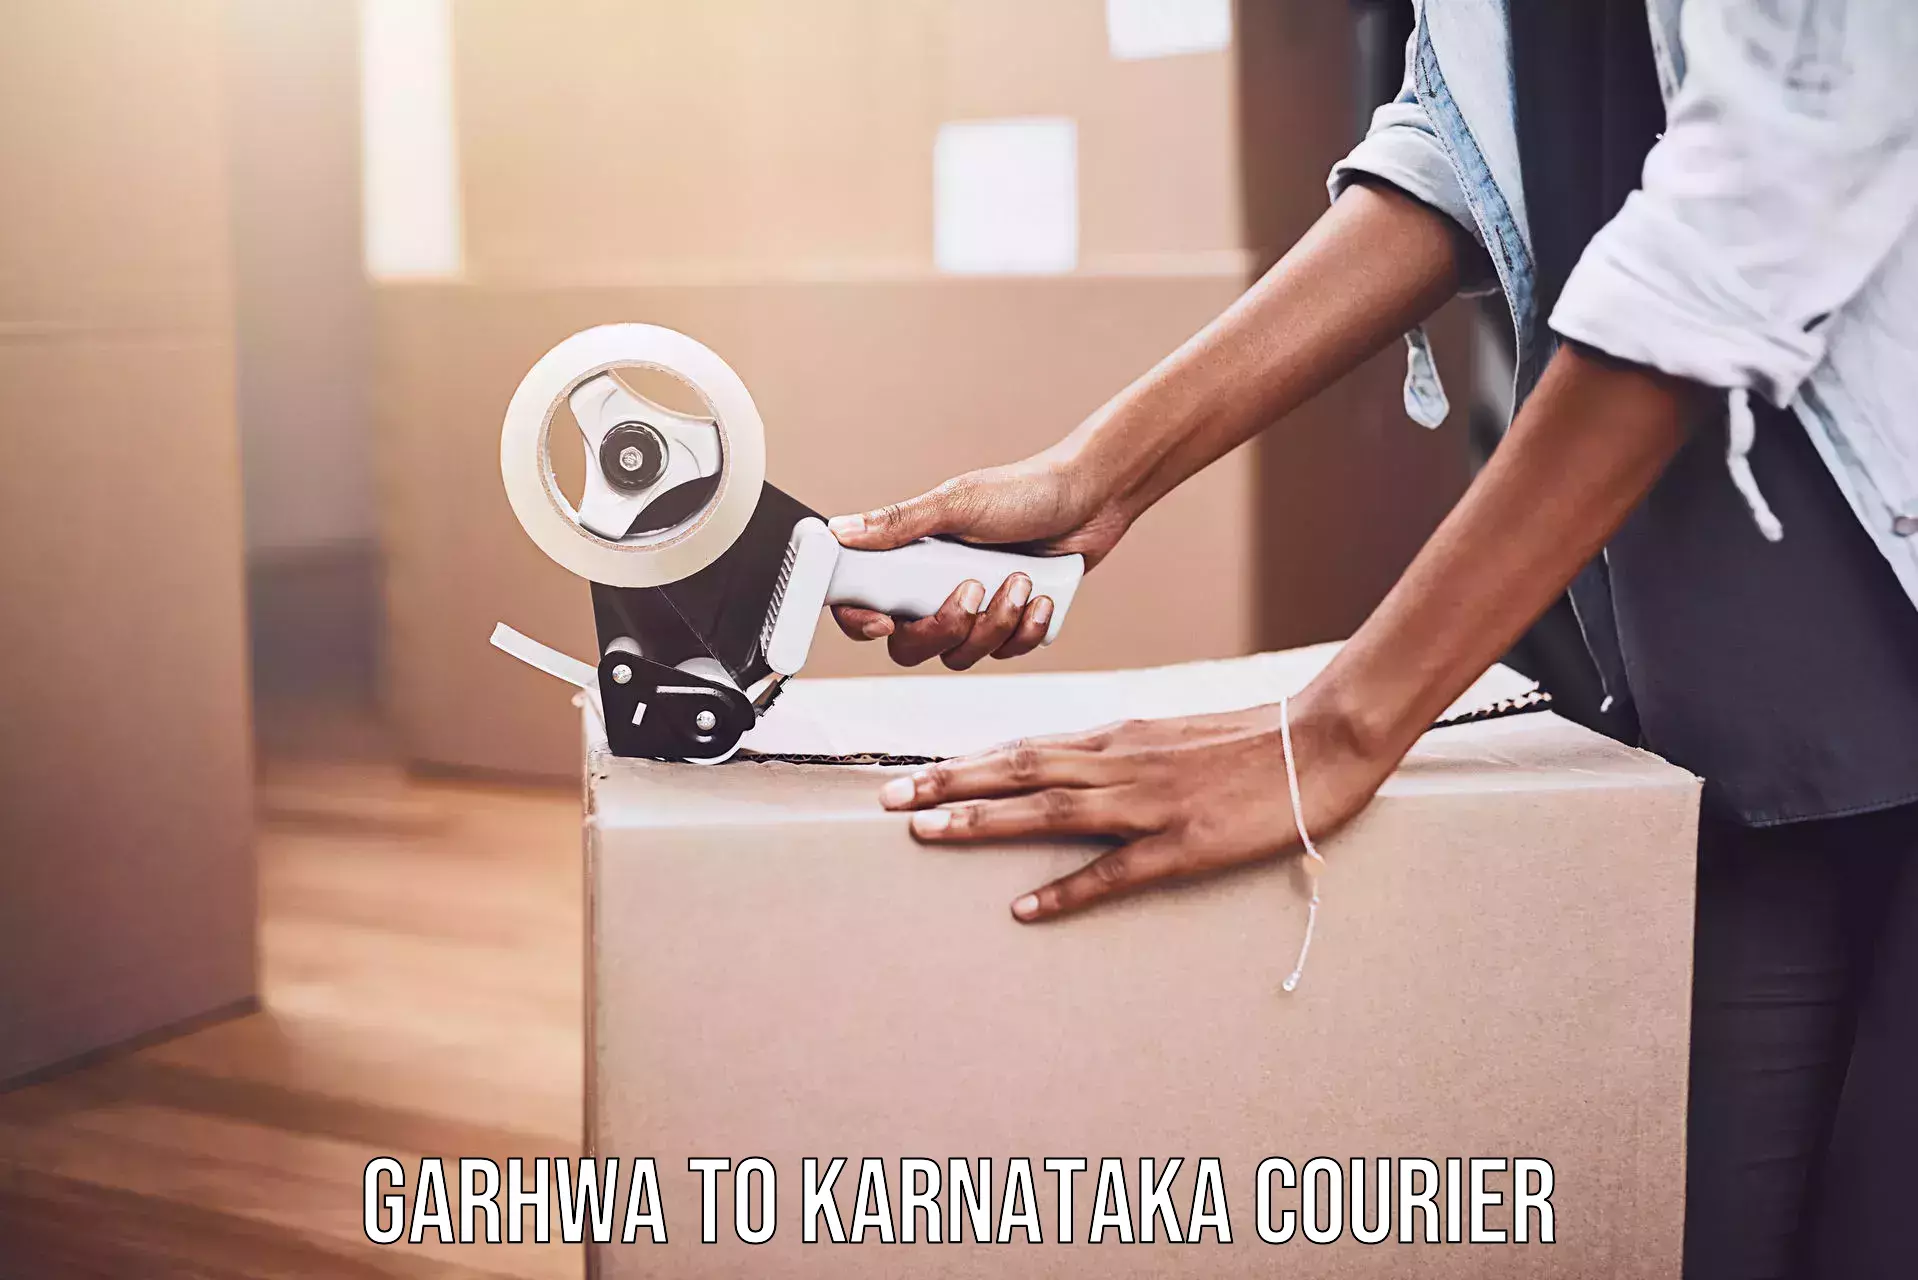 Courier service comparison Garhwa to Chikmagalur